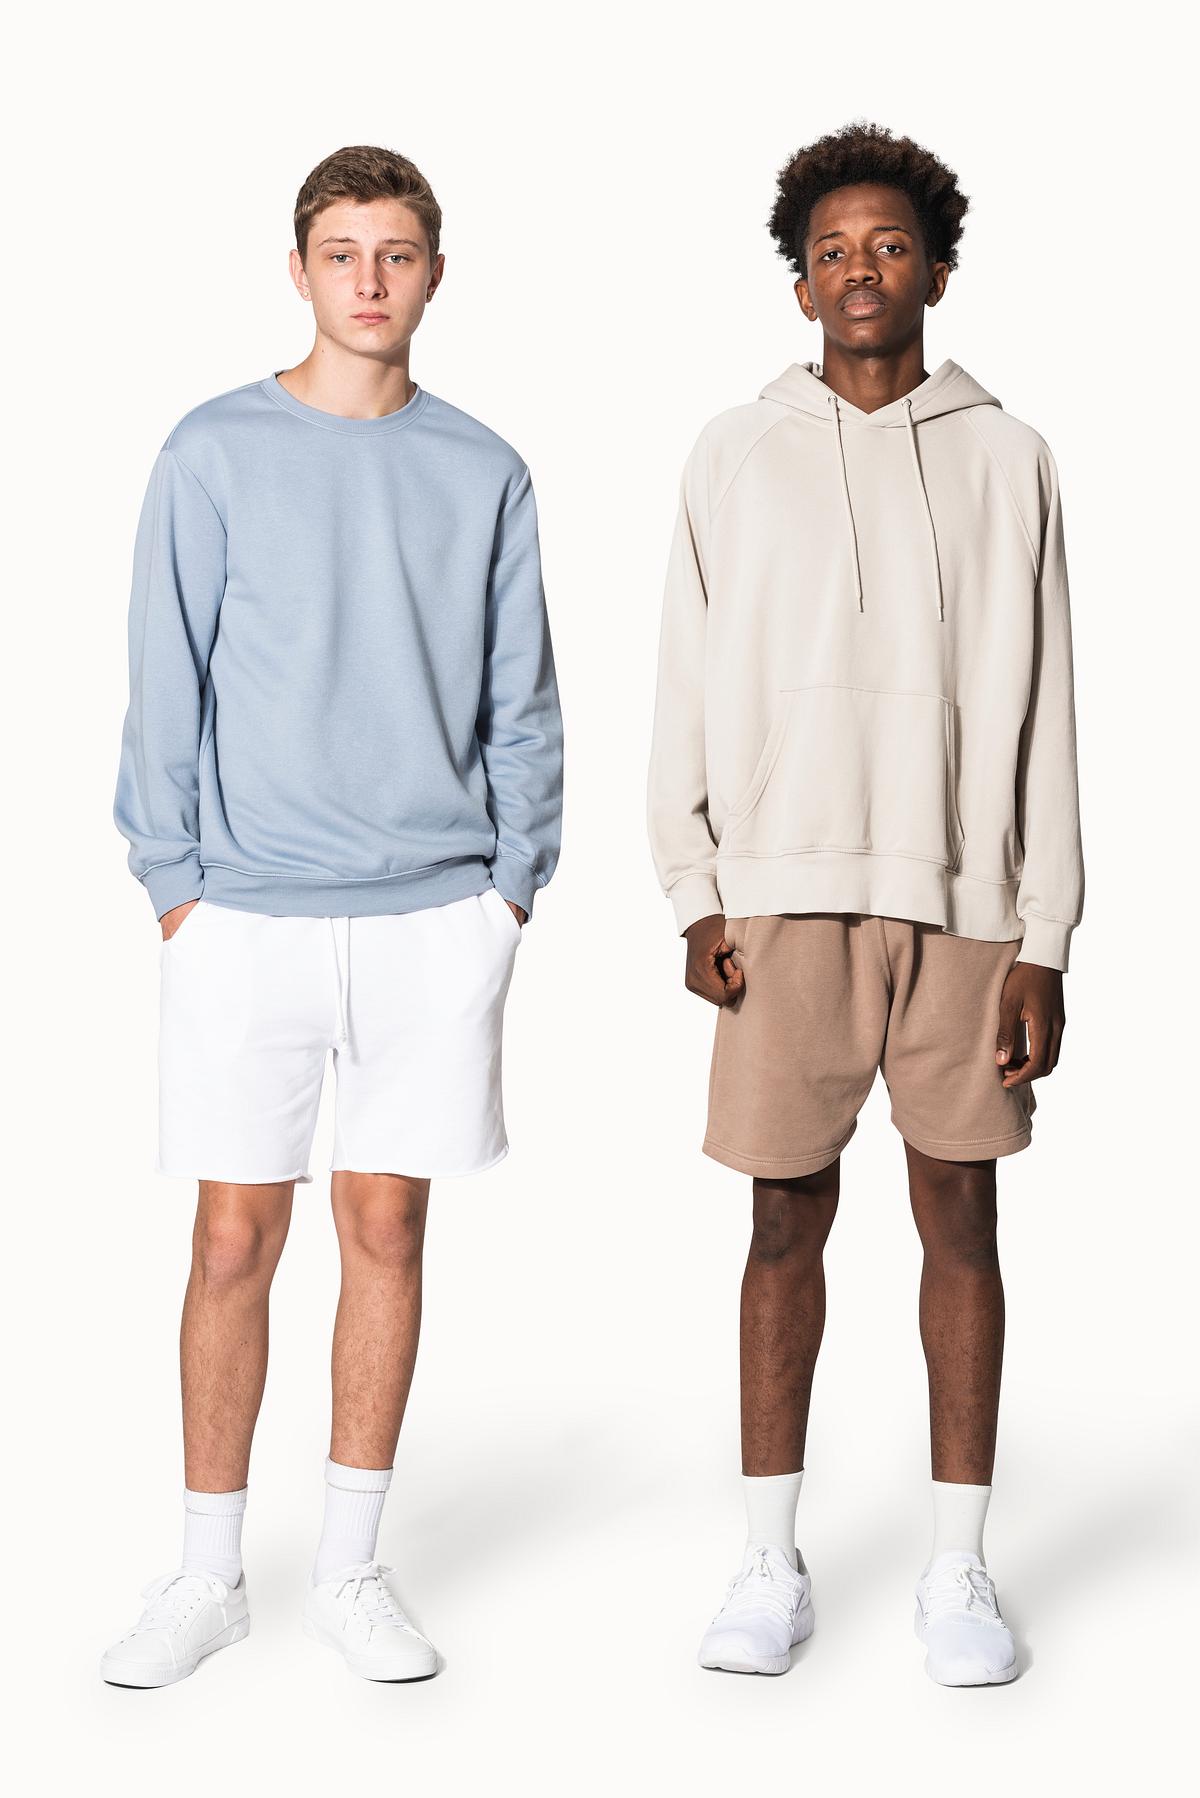 Sweater and hoodie mockup psd | Premium PSD Mockup - rawpixel